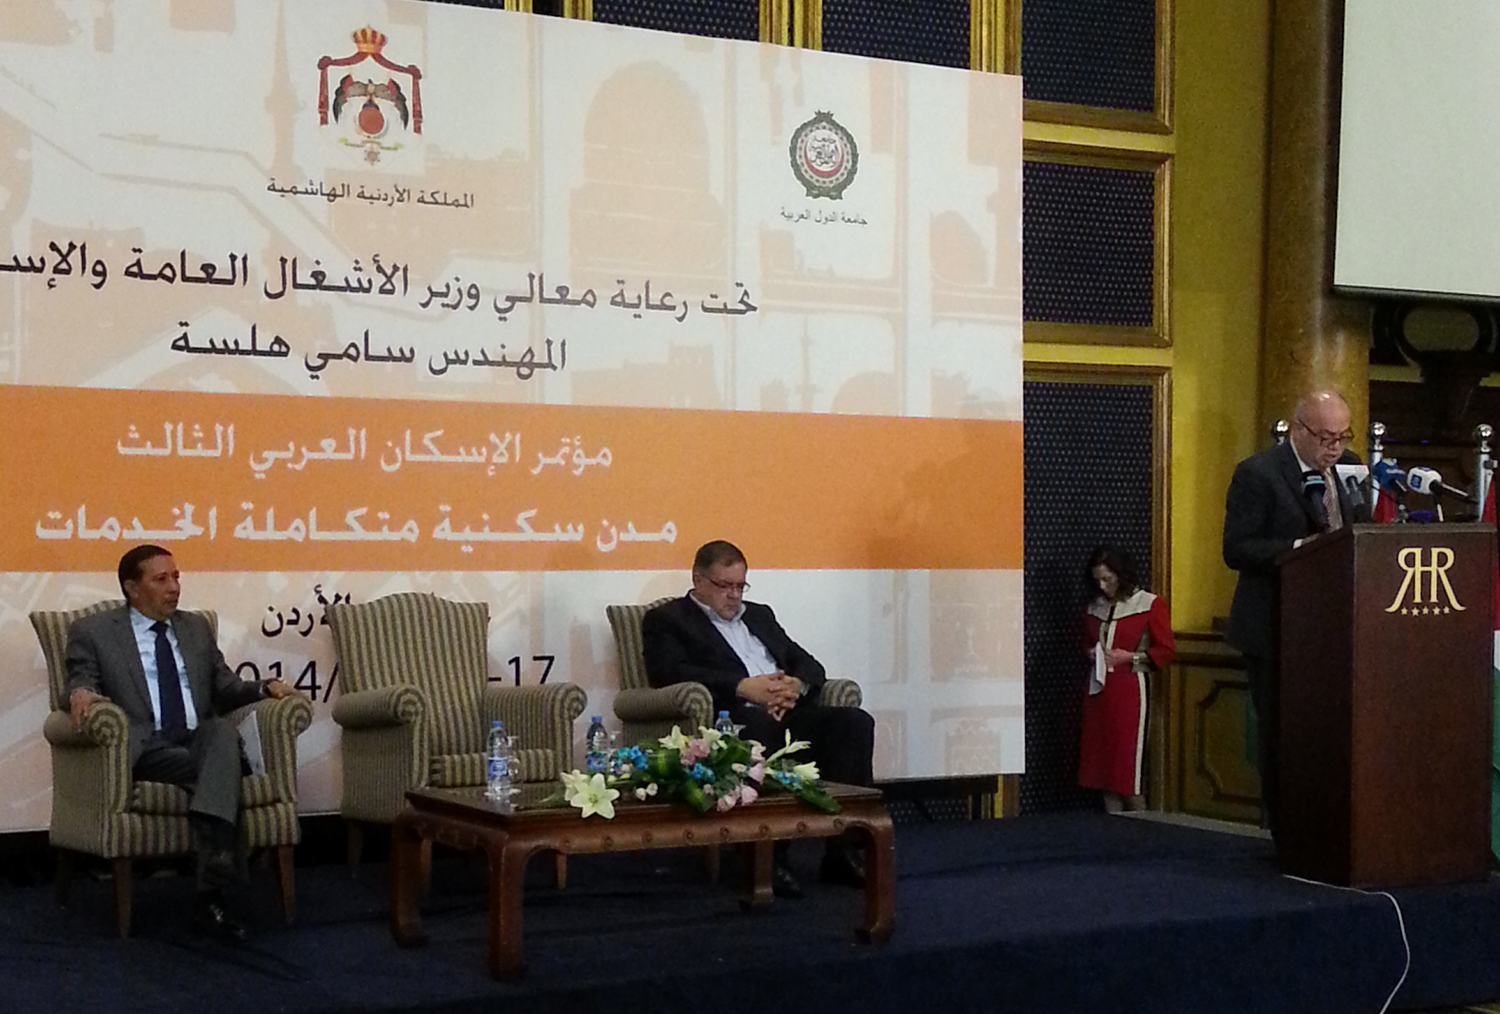 3rd Arab Housing Conf. kicks off in Jordan